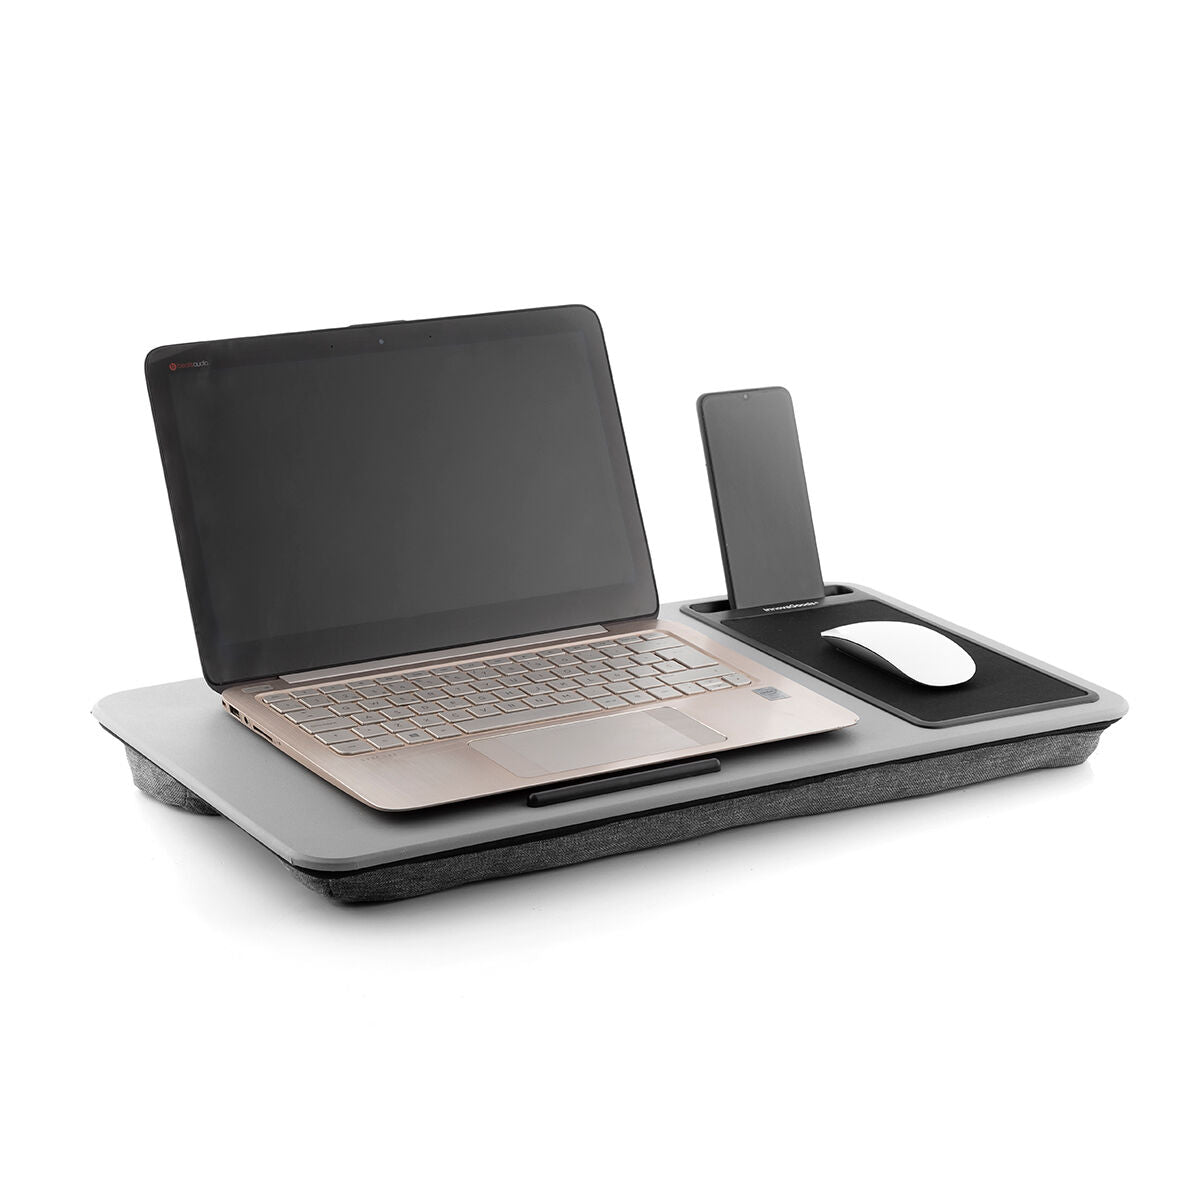 Desk de laptop portátil com XL Cushion Deskion Innovóragoods